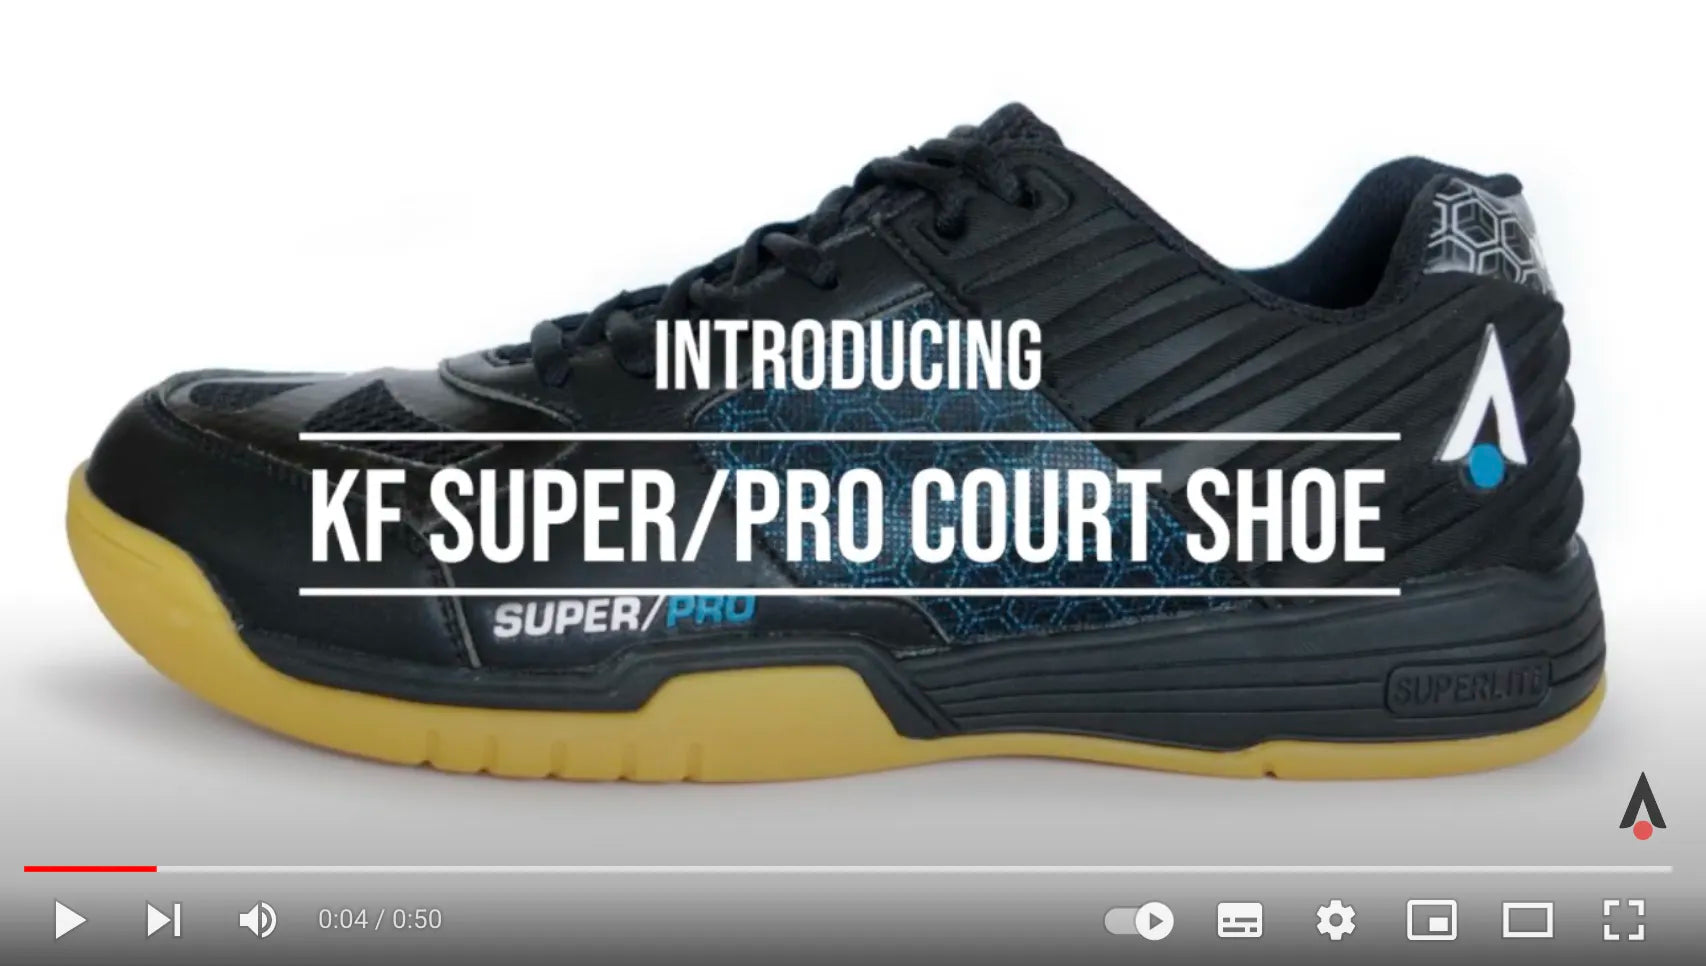 Load video: The New Karakal Super Pro Court Shoe